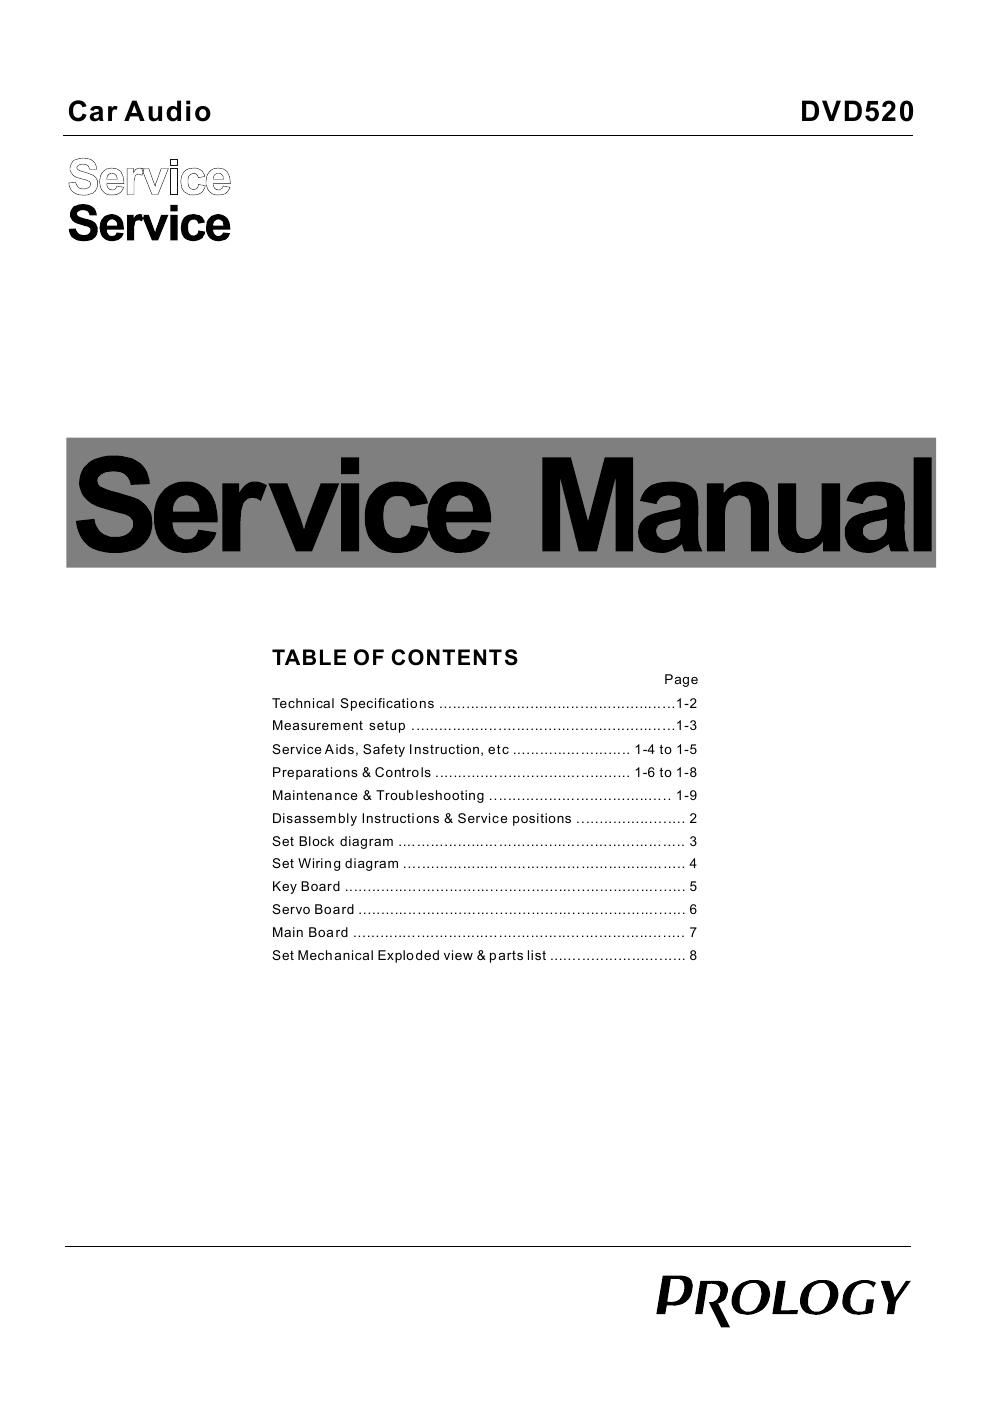 prology dvd 520 service manual 2